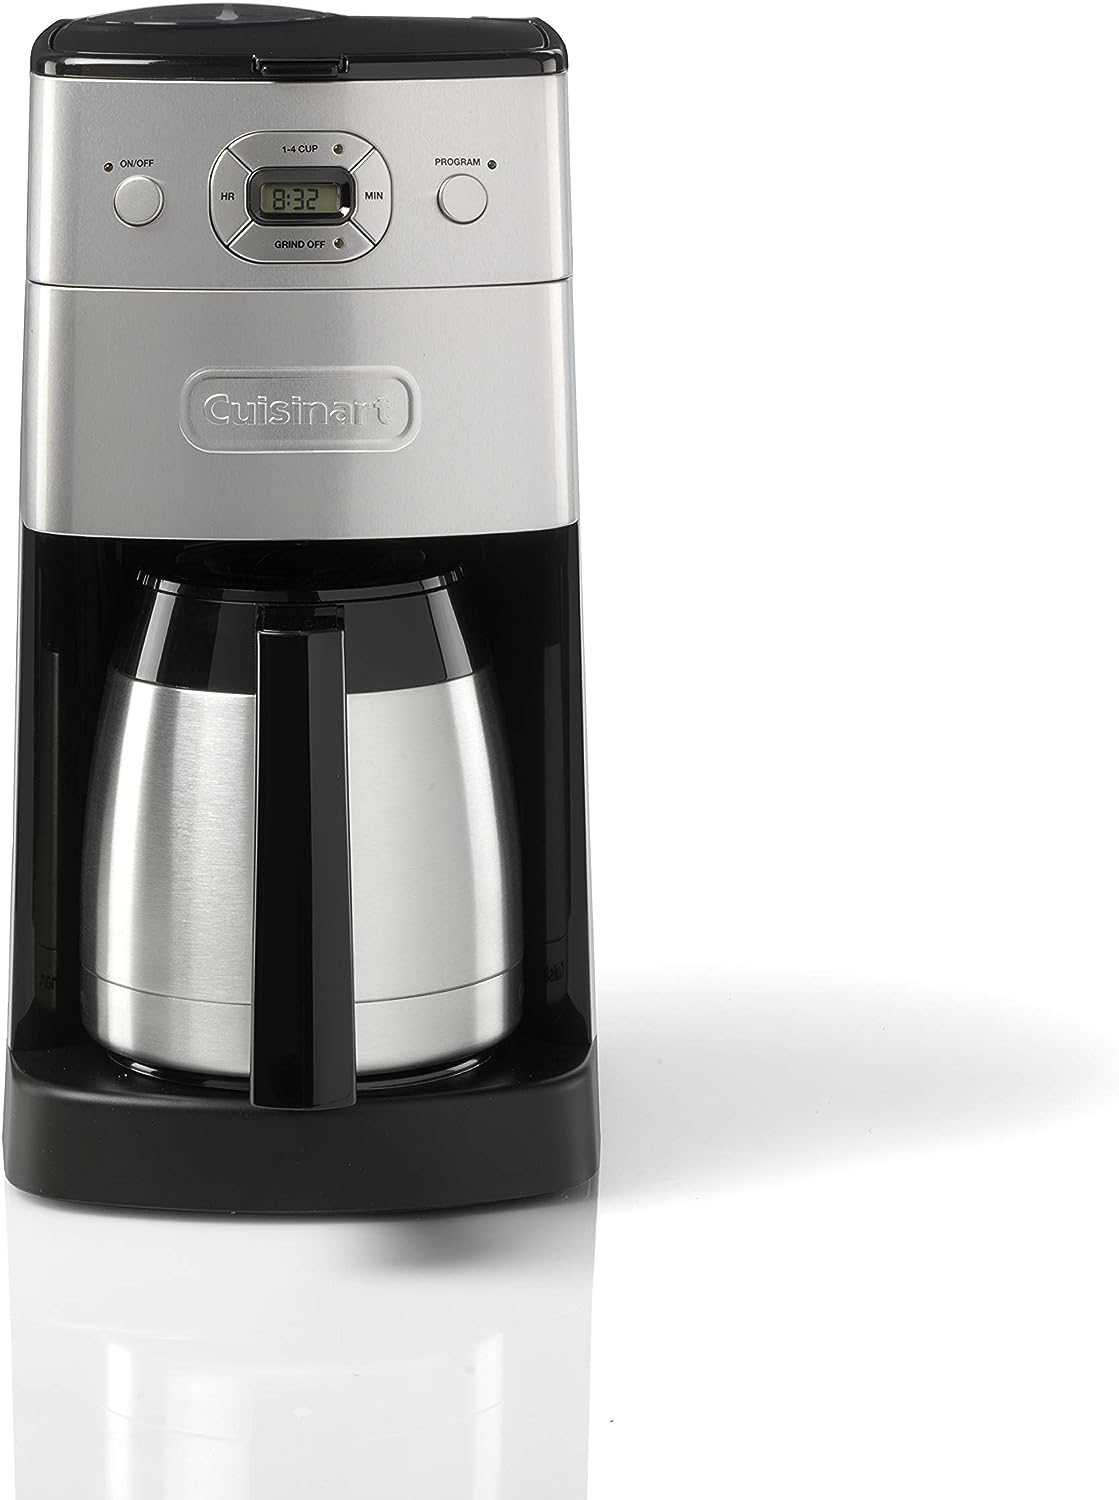 Cuisinart Grinding and Brew Automatic Coffee Machine - DGB650BCU - U.K.IMPORT **